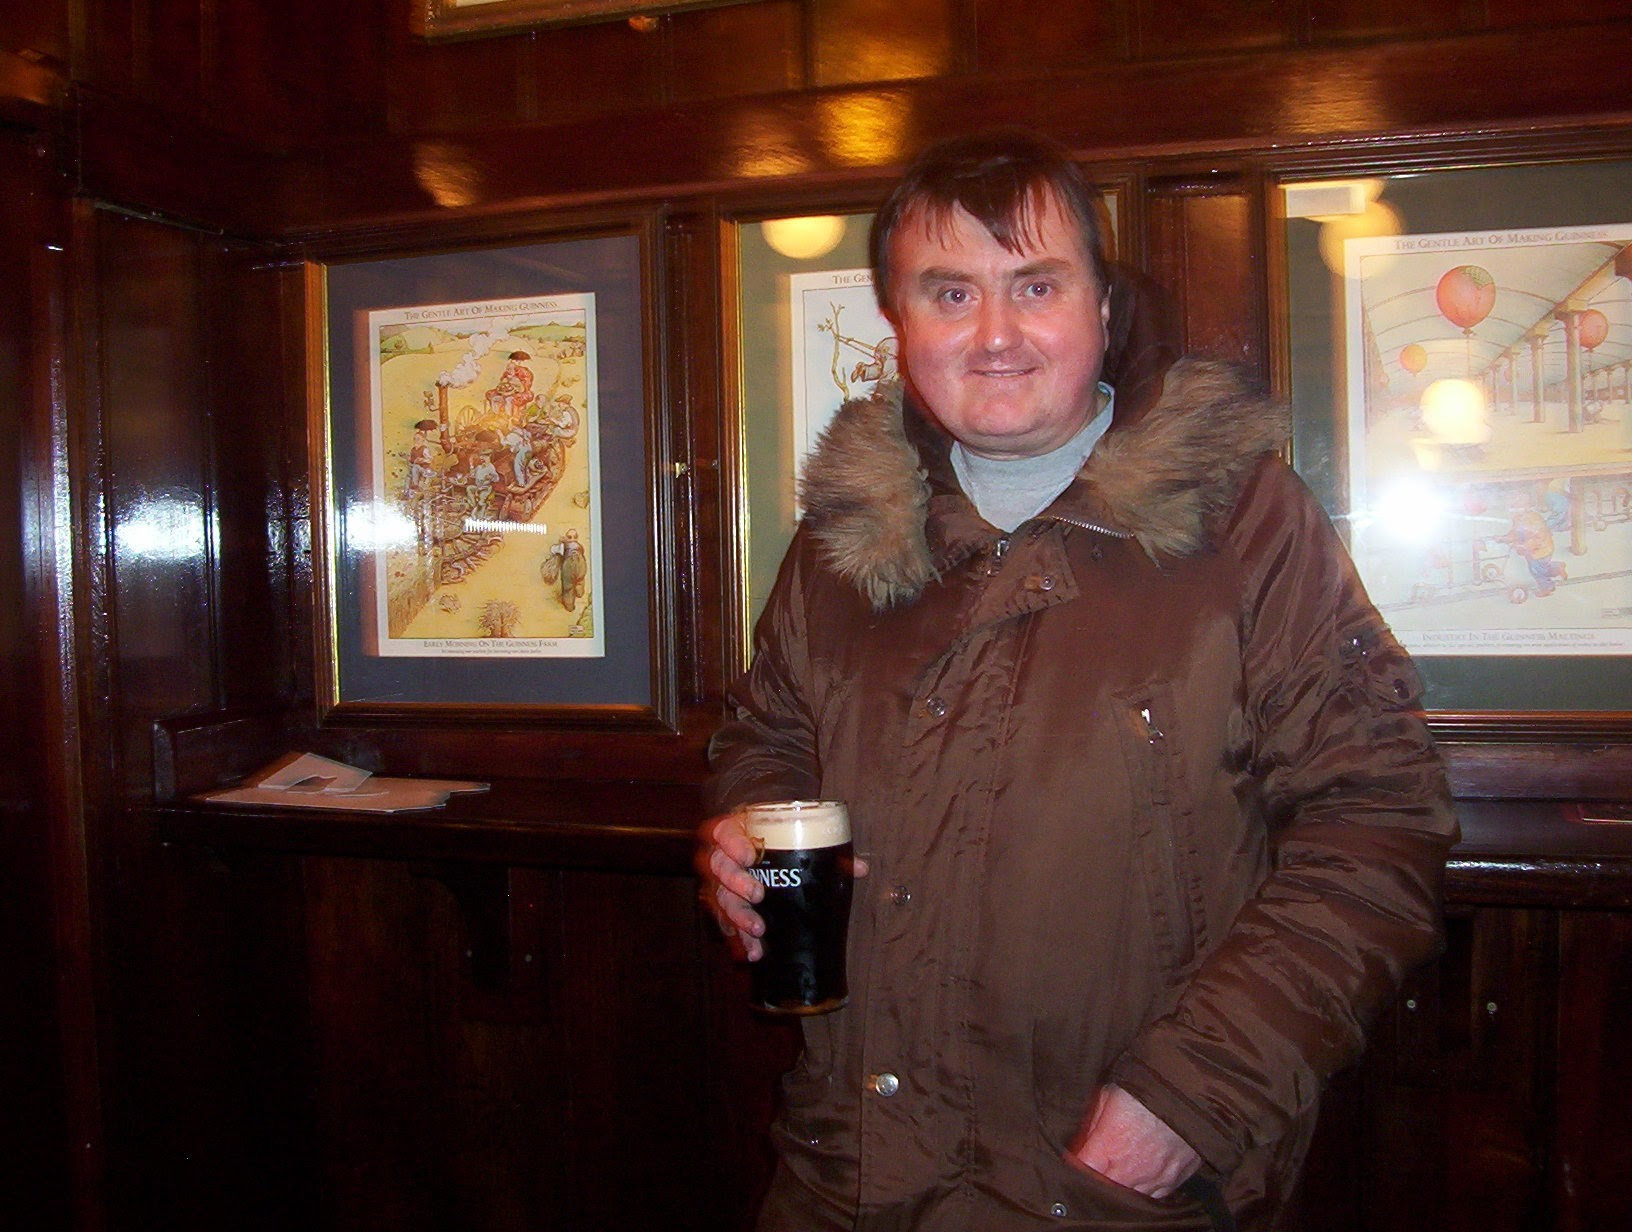 Having a pint of Guinness in the Temple Bar, Dublin